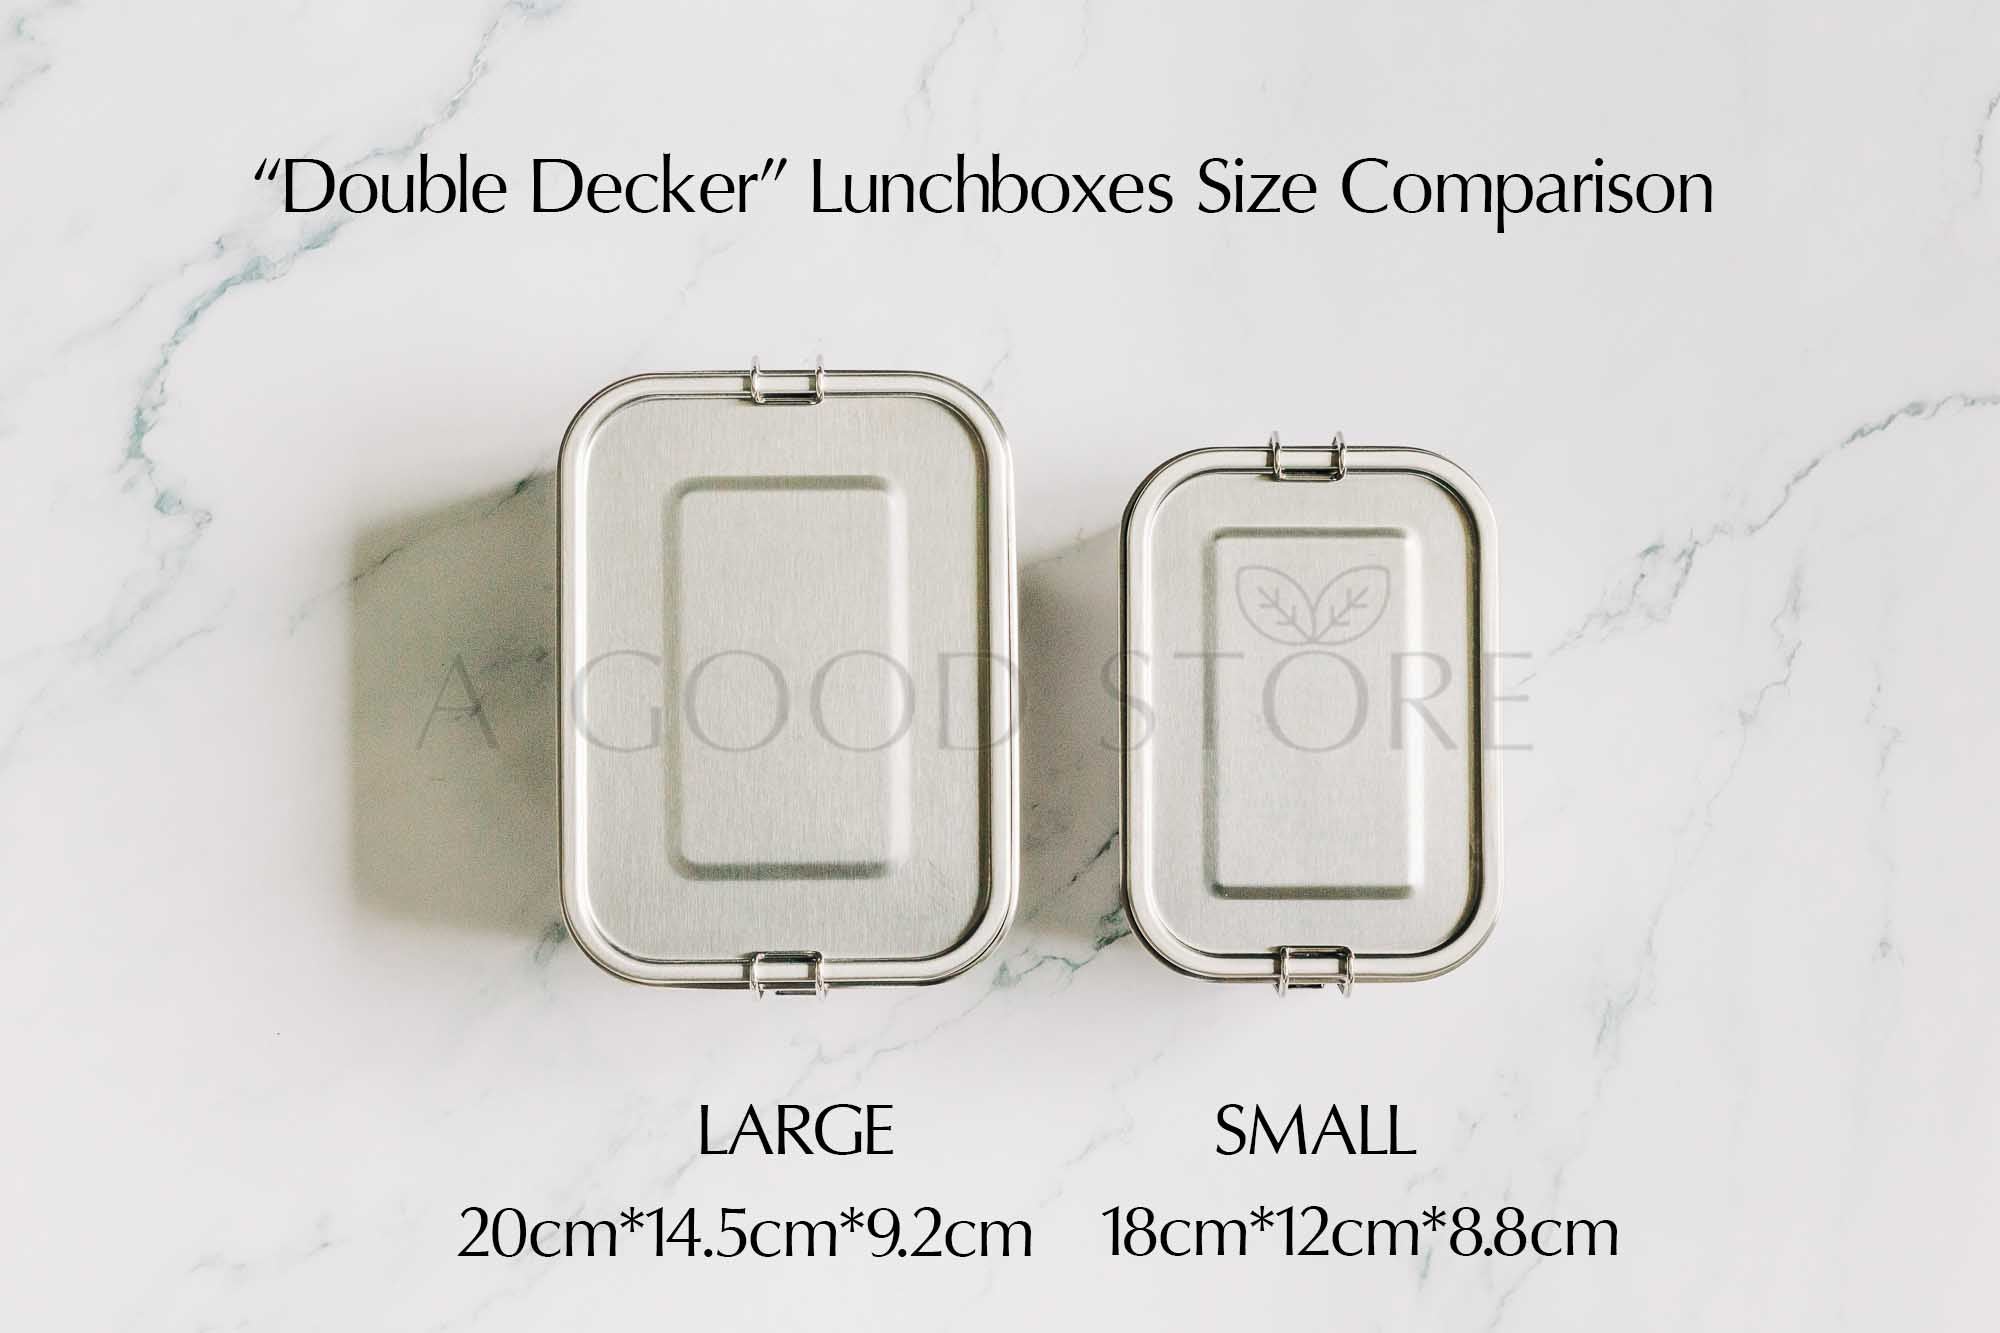 stainless-steel-bento-2-tier-tiffin-lunchbox-size-comparison